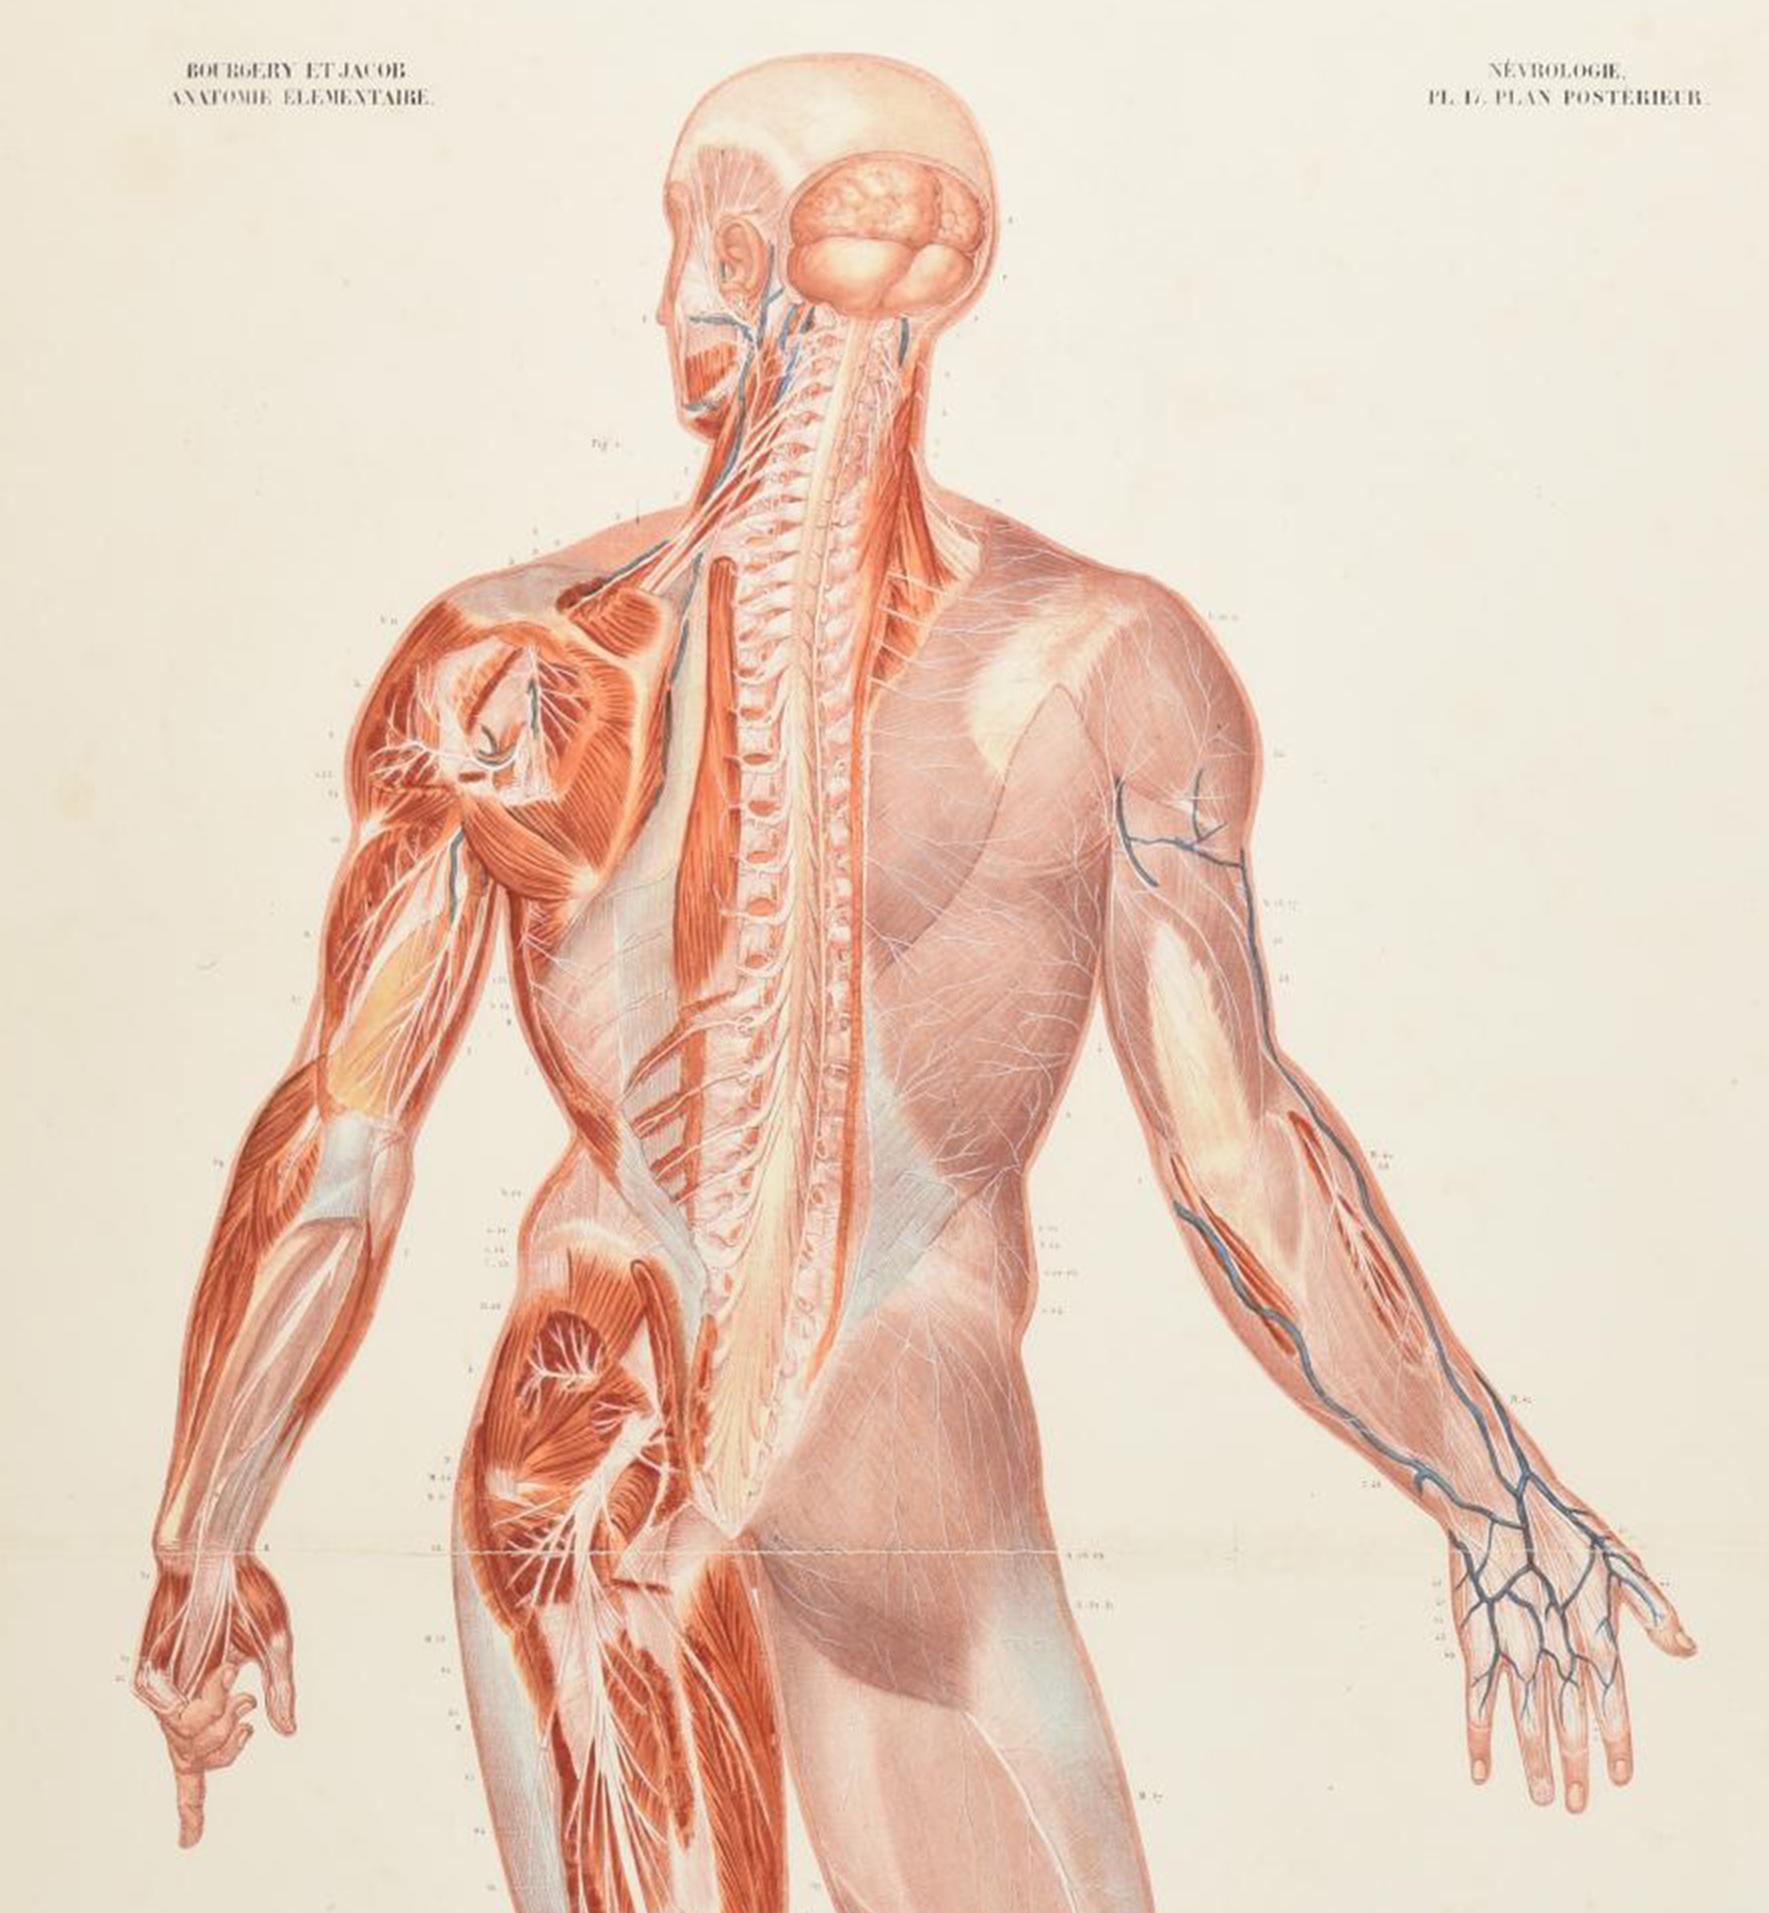 plans of the body anatomy